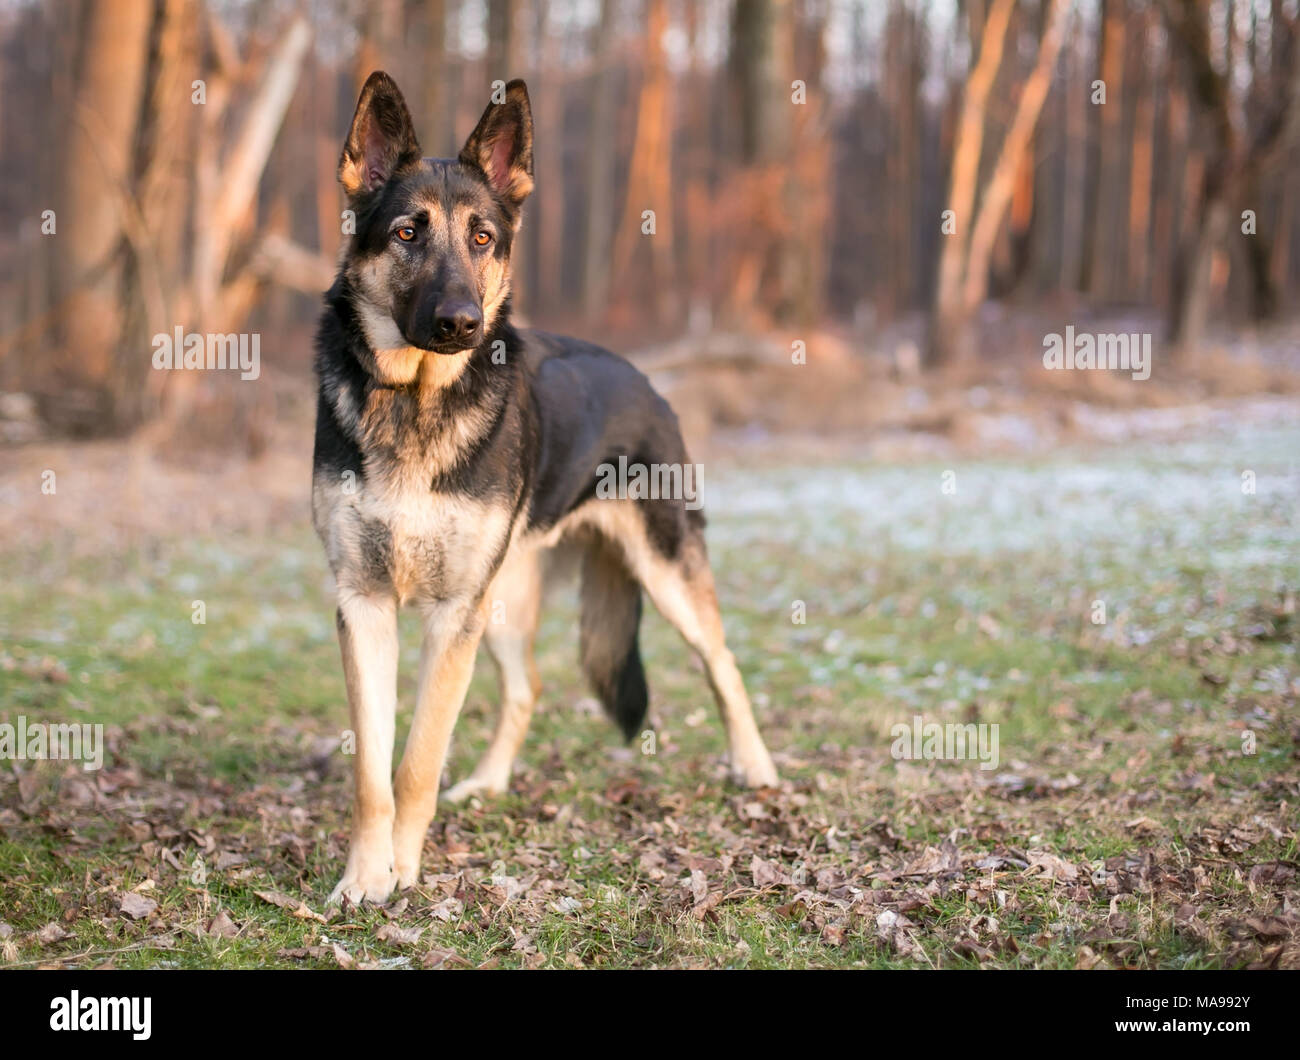 A purebred German Shepherd dog outdoors Stock Photo